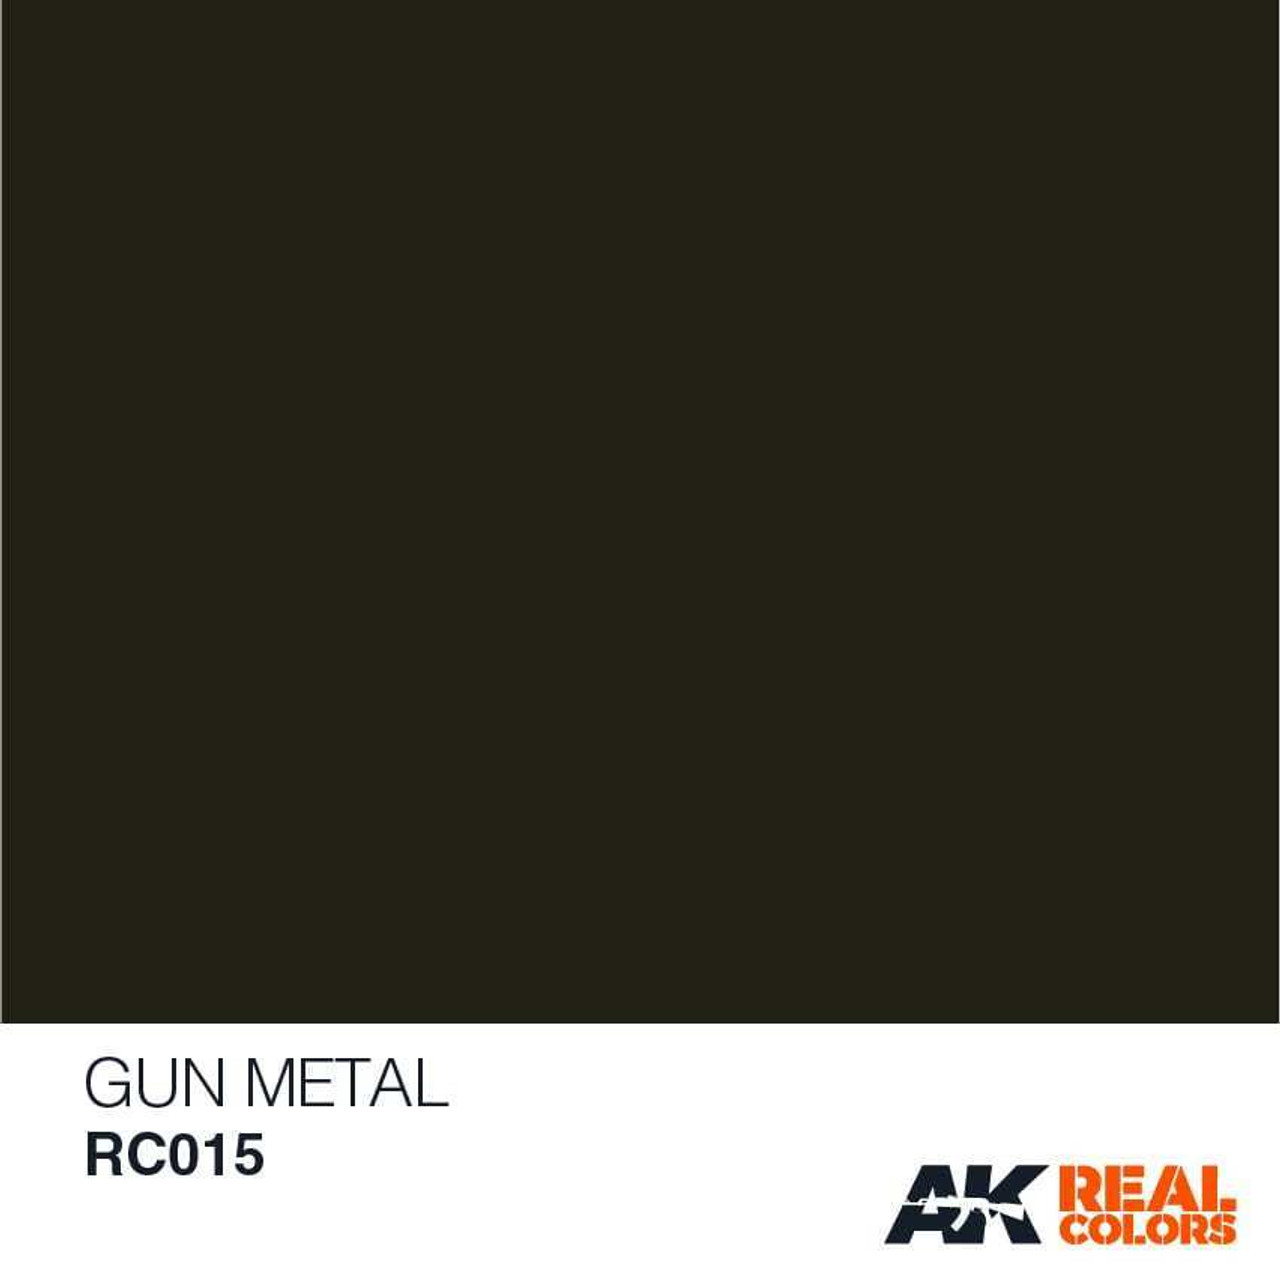 AKIRC015 Real Colors  Gun Metal Acrylic Lacquer Paint 10ml Bottle